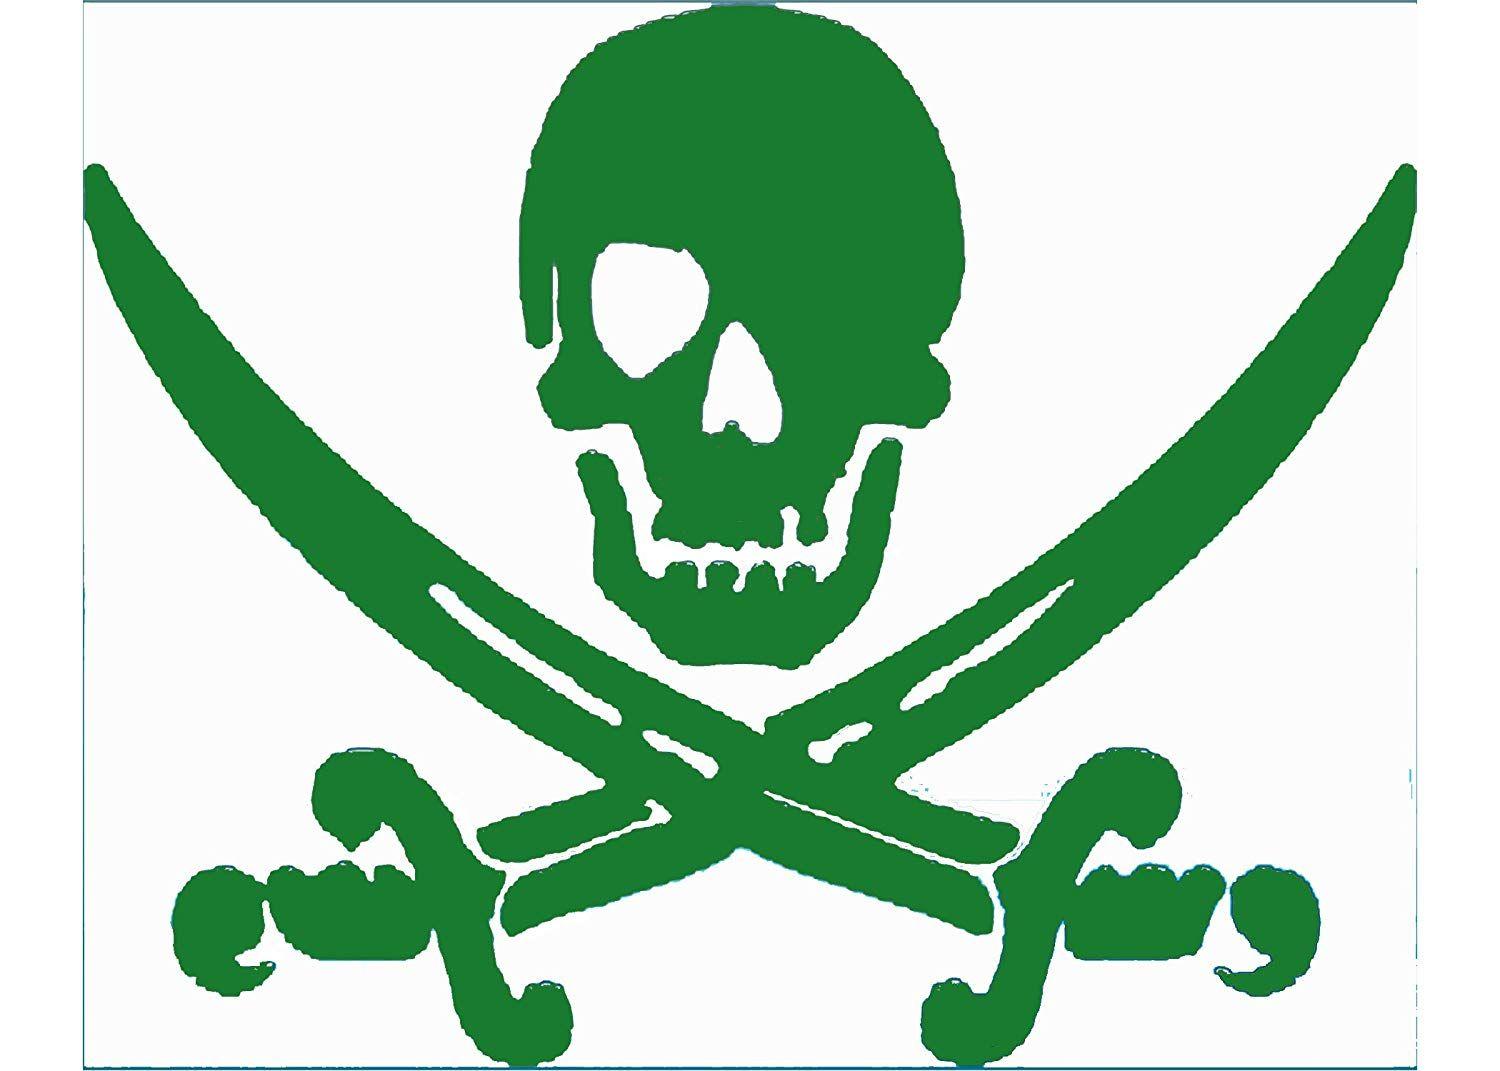 Green Pirate Logo - Amazon.com: WickedGoodz Green Pirate Skull & Swords Vinyl Window ...